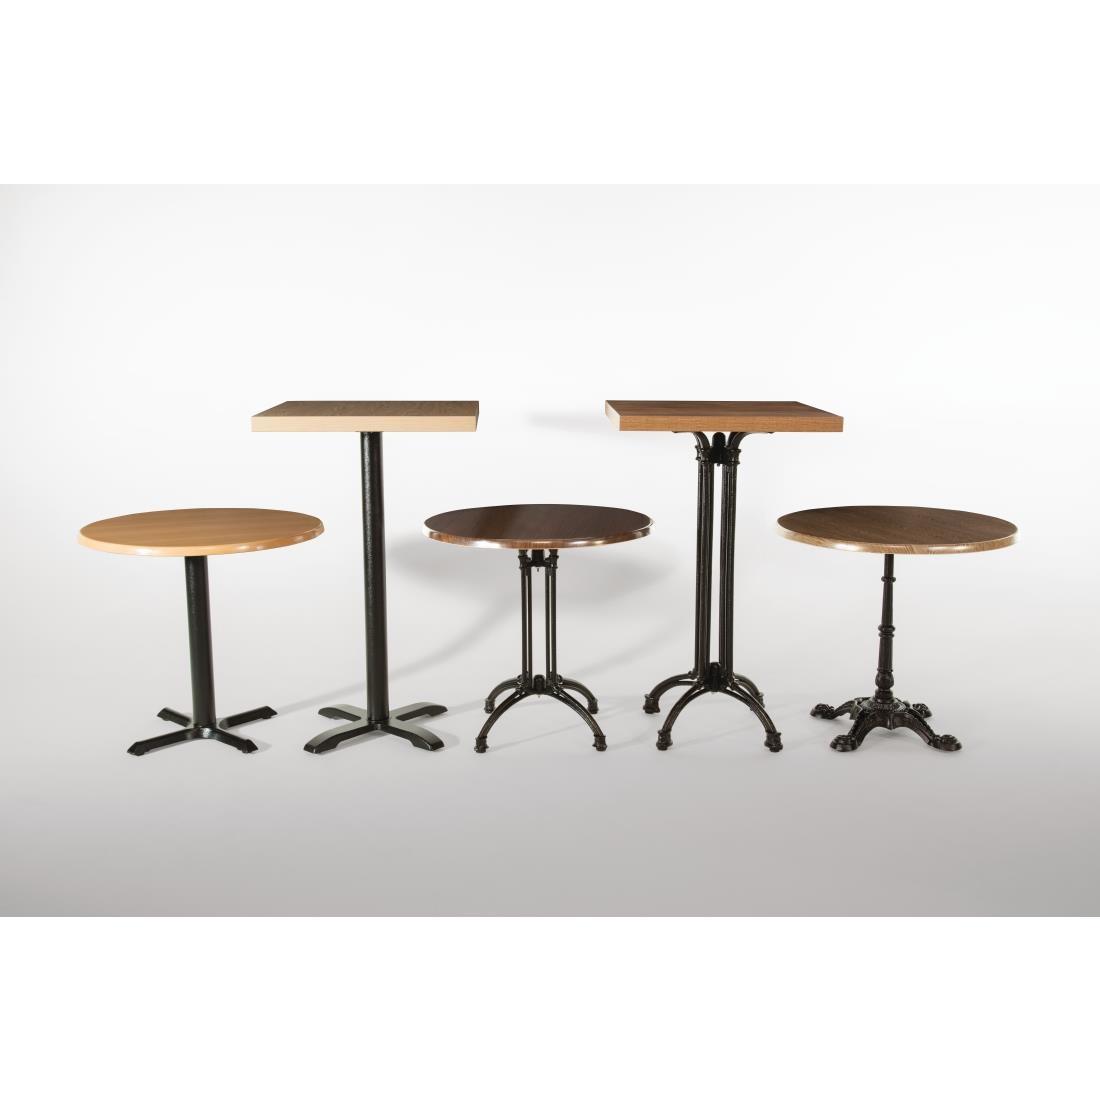 Bolero Cast Iron Decorative Brasserie Table Leg Base - HC298  - 6